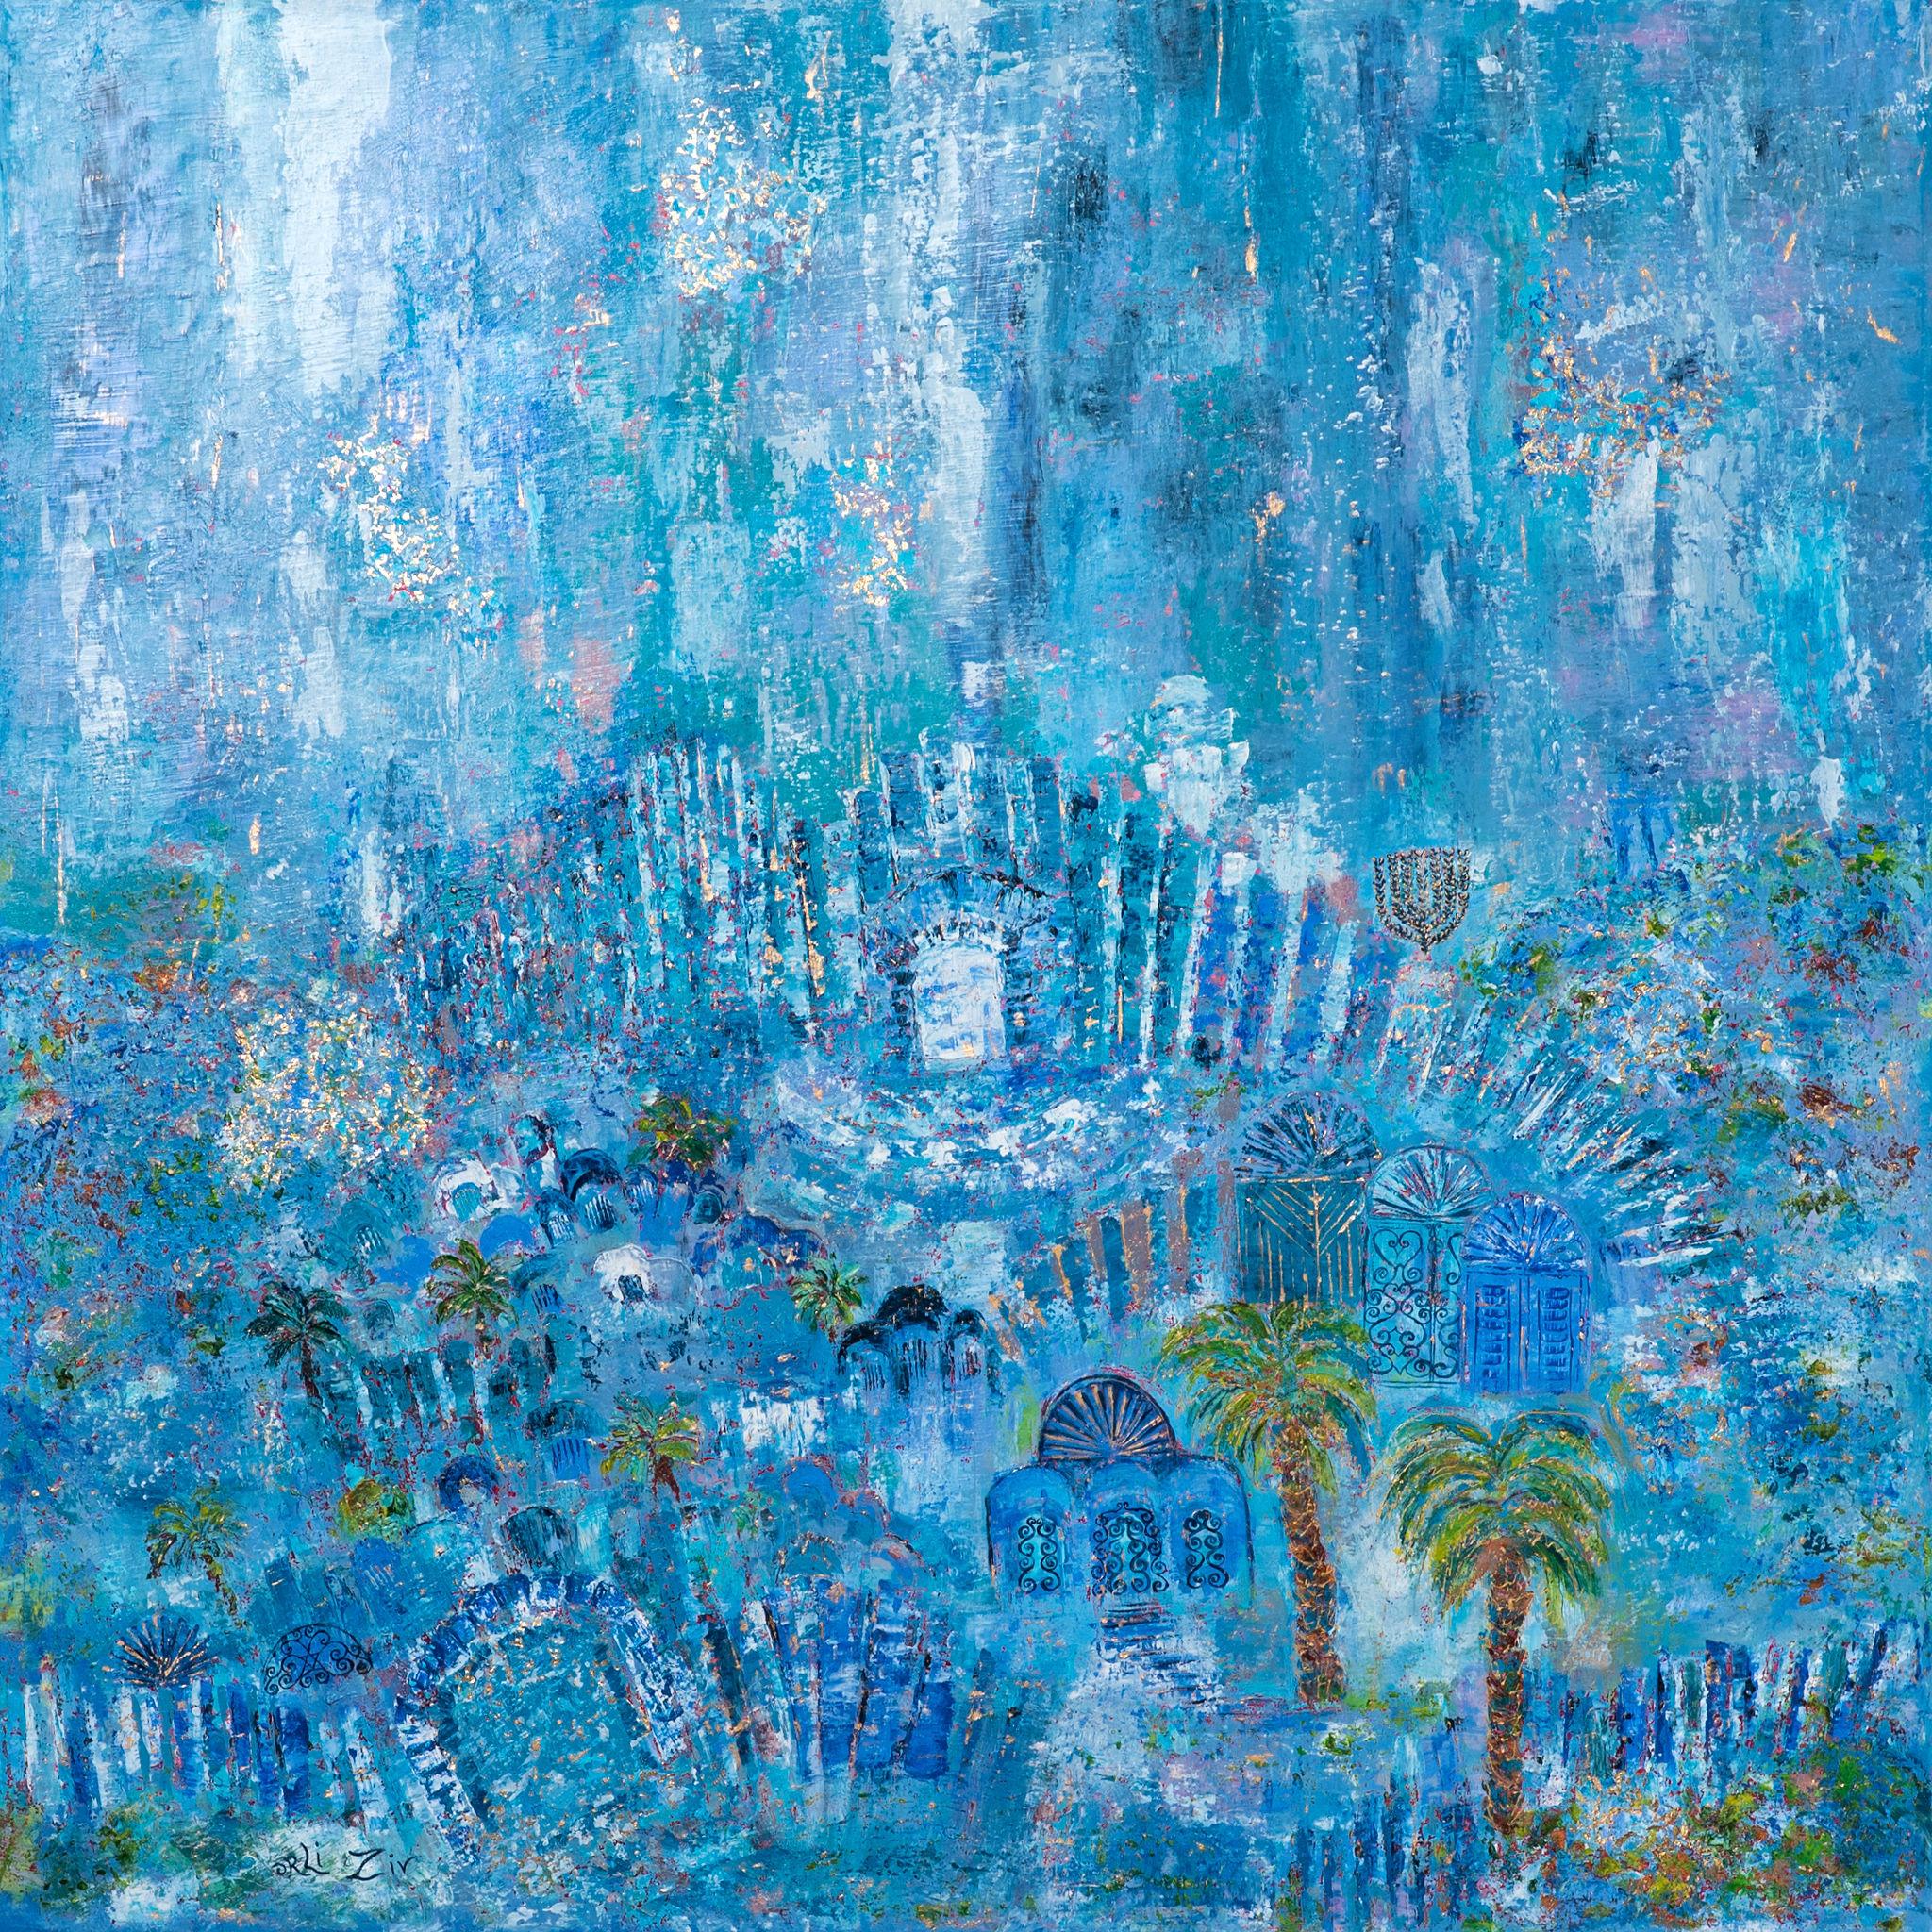 Orli Ziv, Jerusalem, Blue atmosphere, oil on canvas, Jerusalem landscape, expressionist, Israeli artist, Israeli art